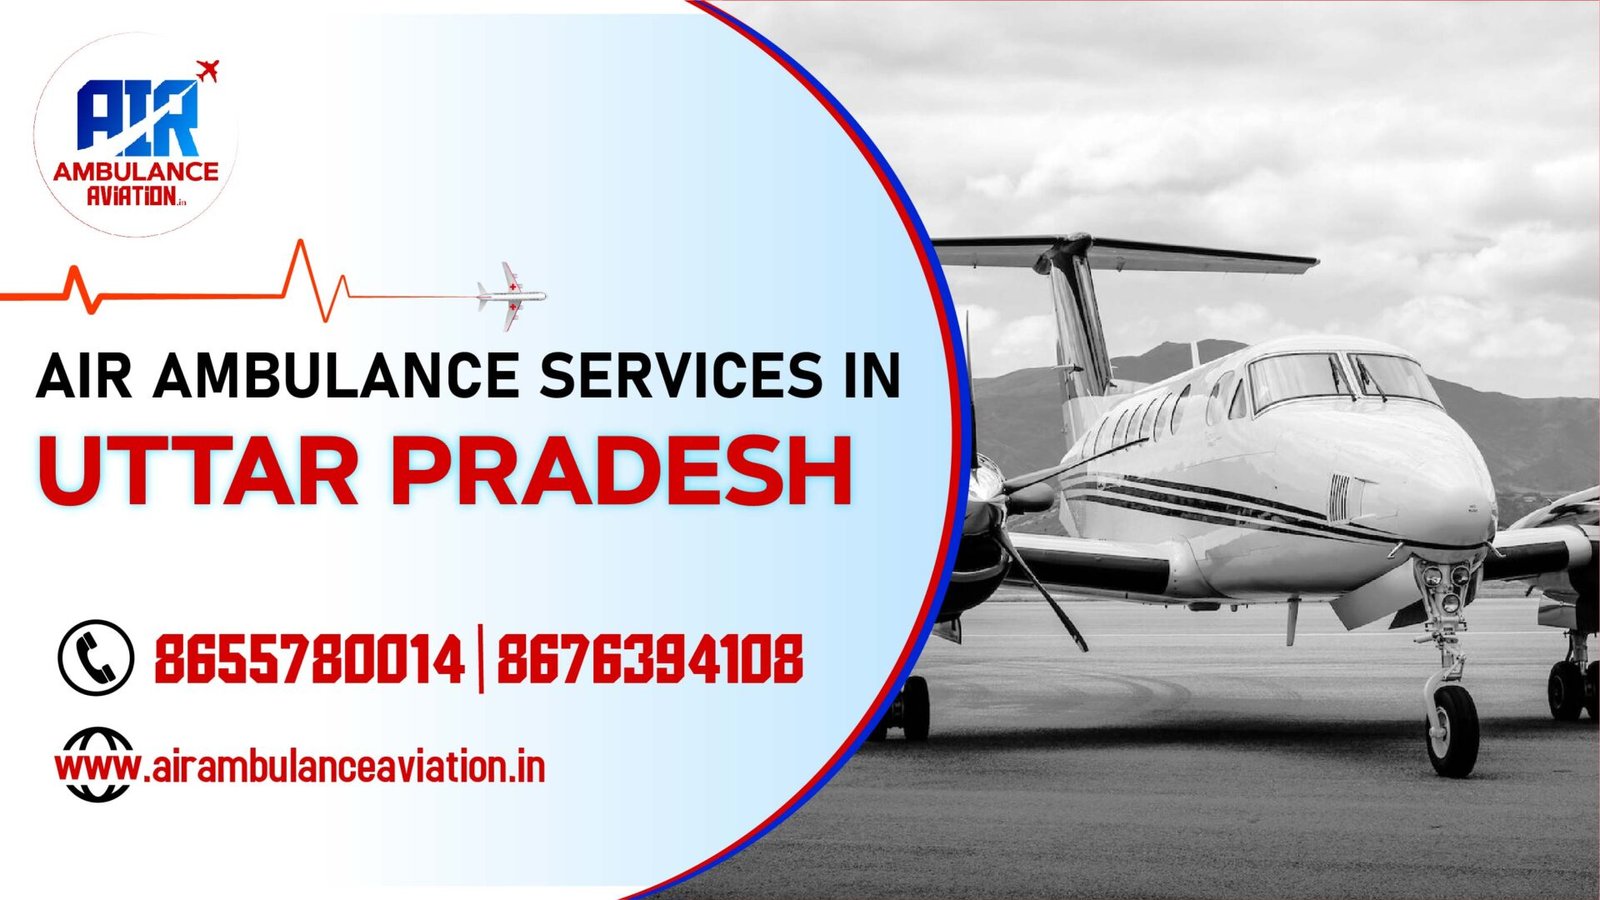 Air Ambulance services in Uttar Pradesh